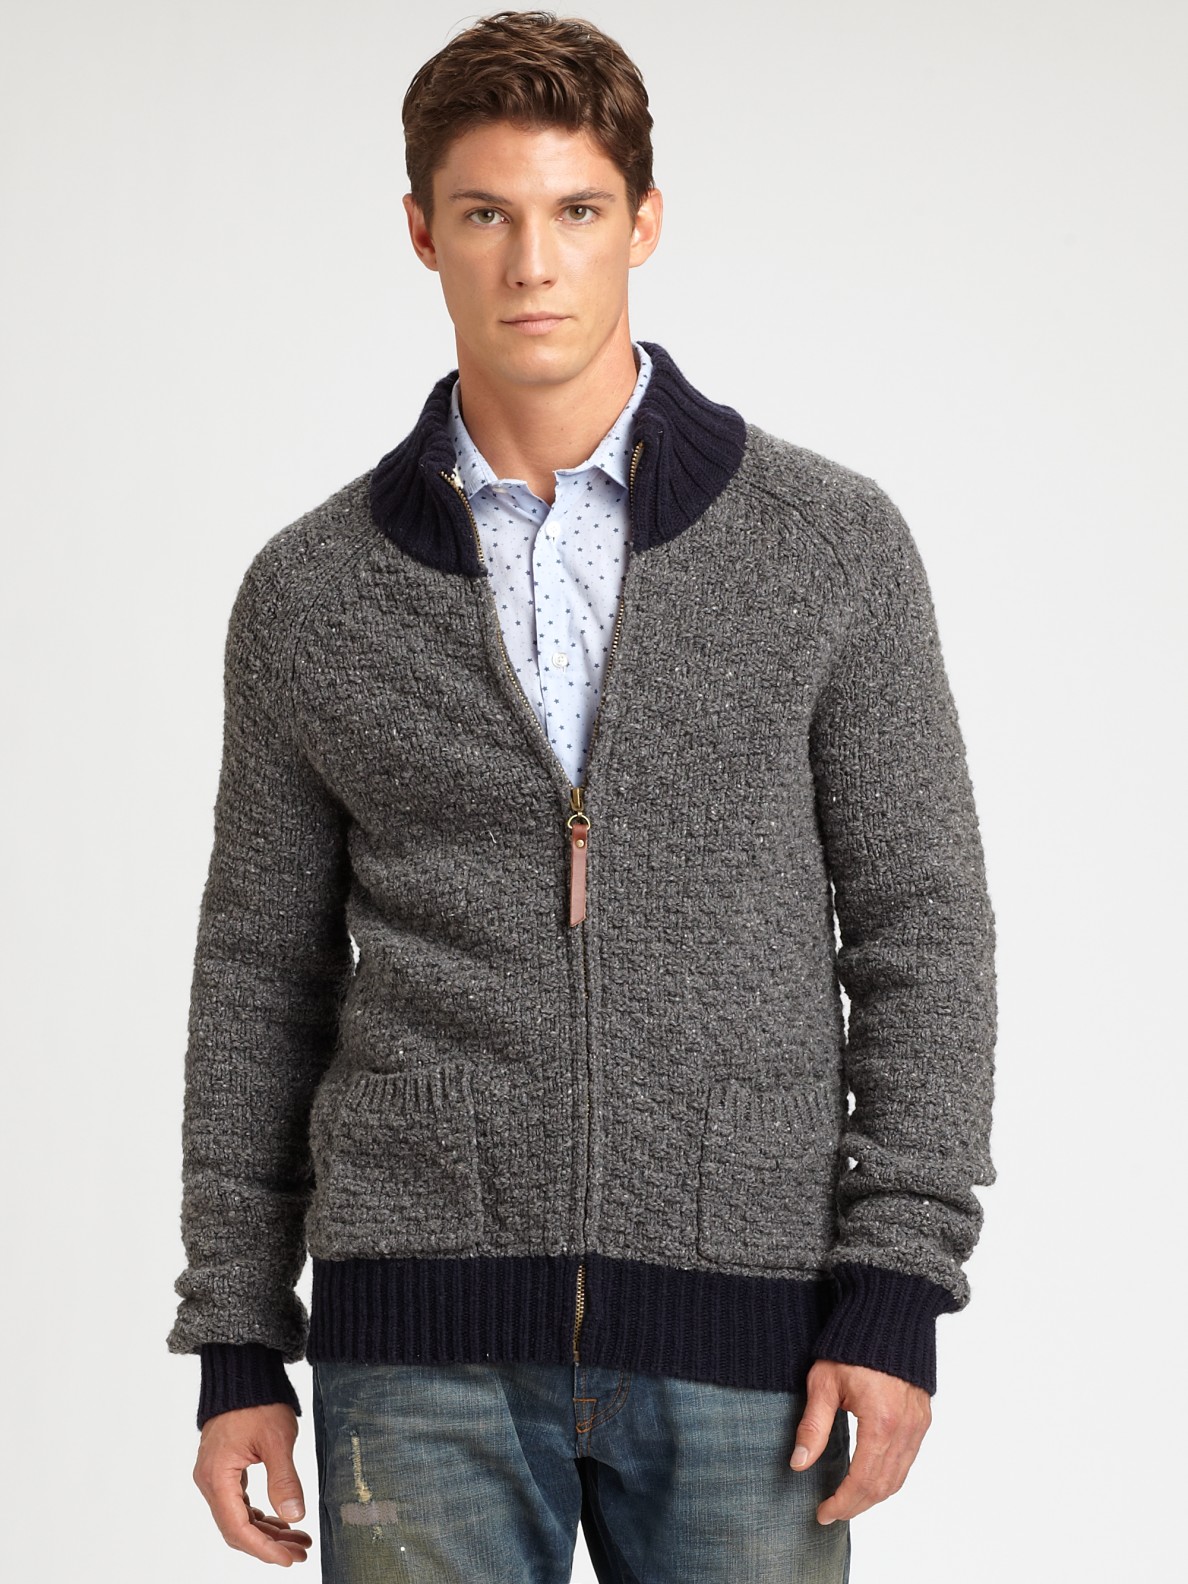 Lyst - Scotch & Soda Zip Cardigan Sweater in Gray for Men